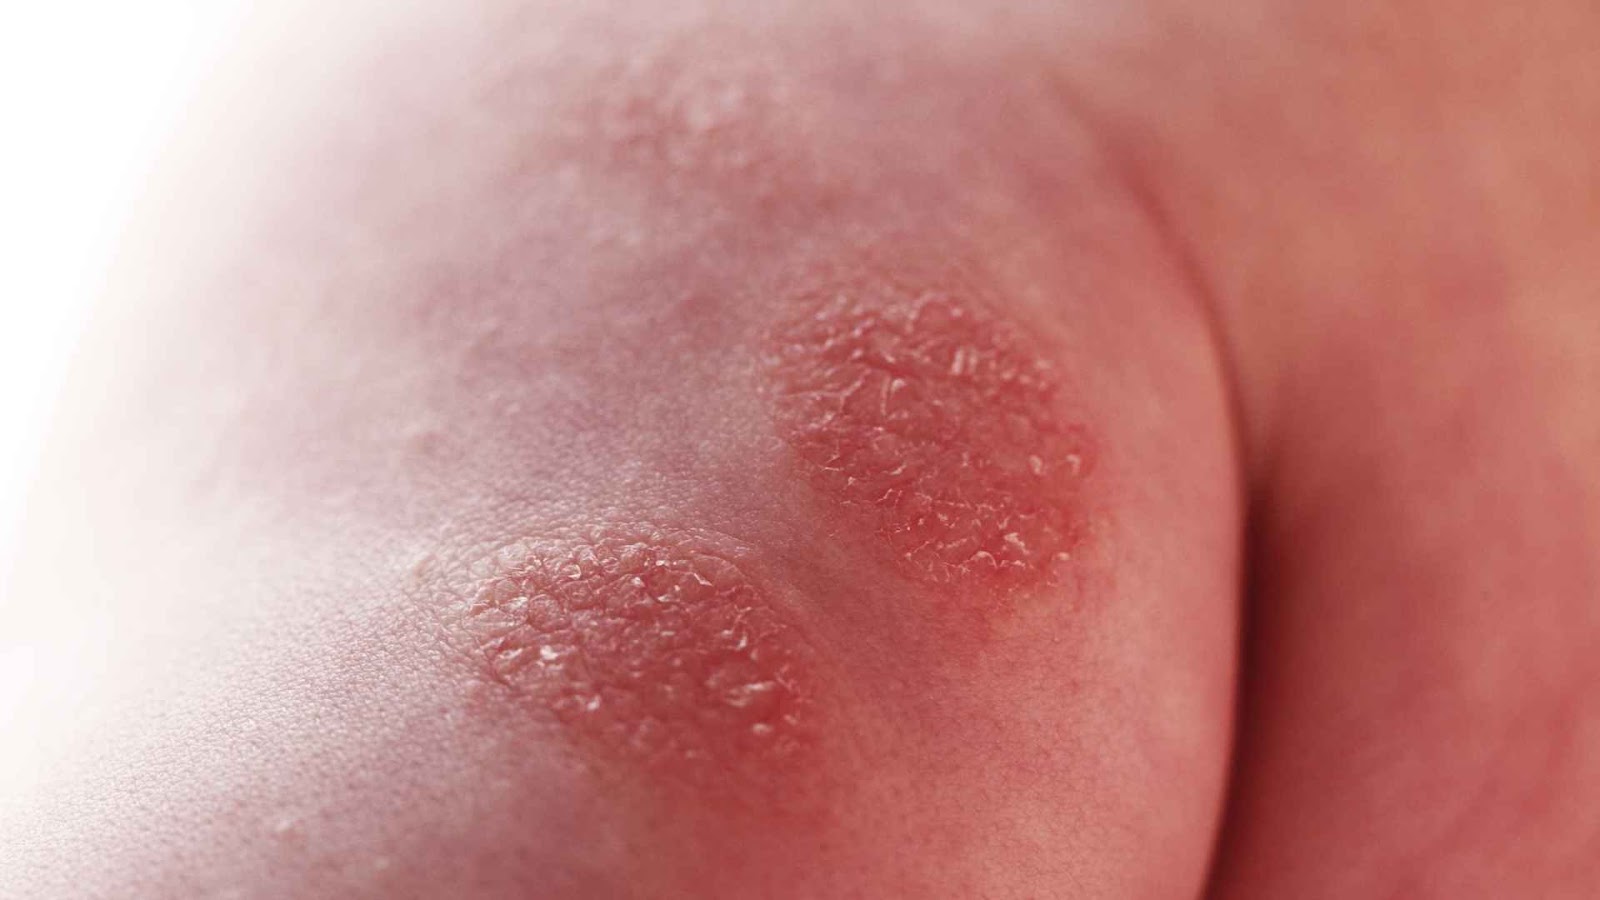 An eczema flare up